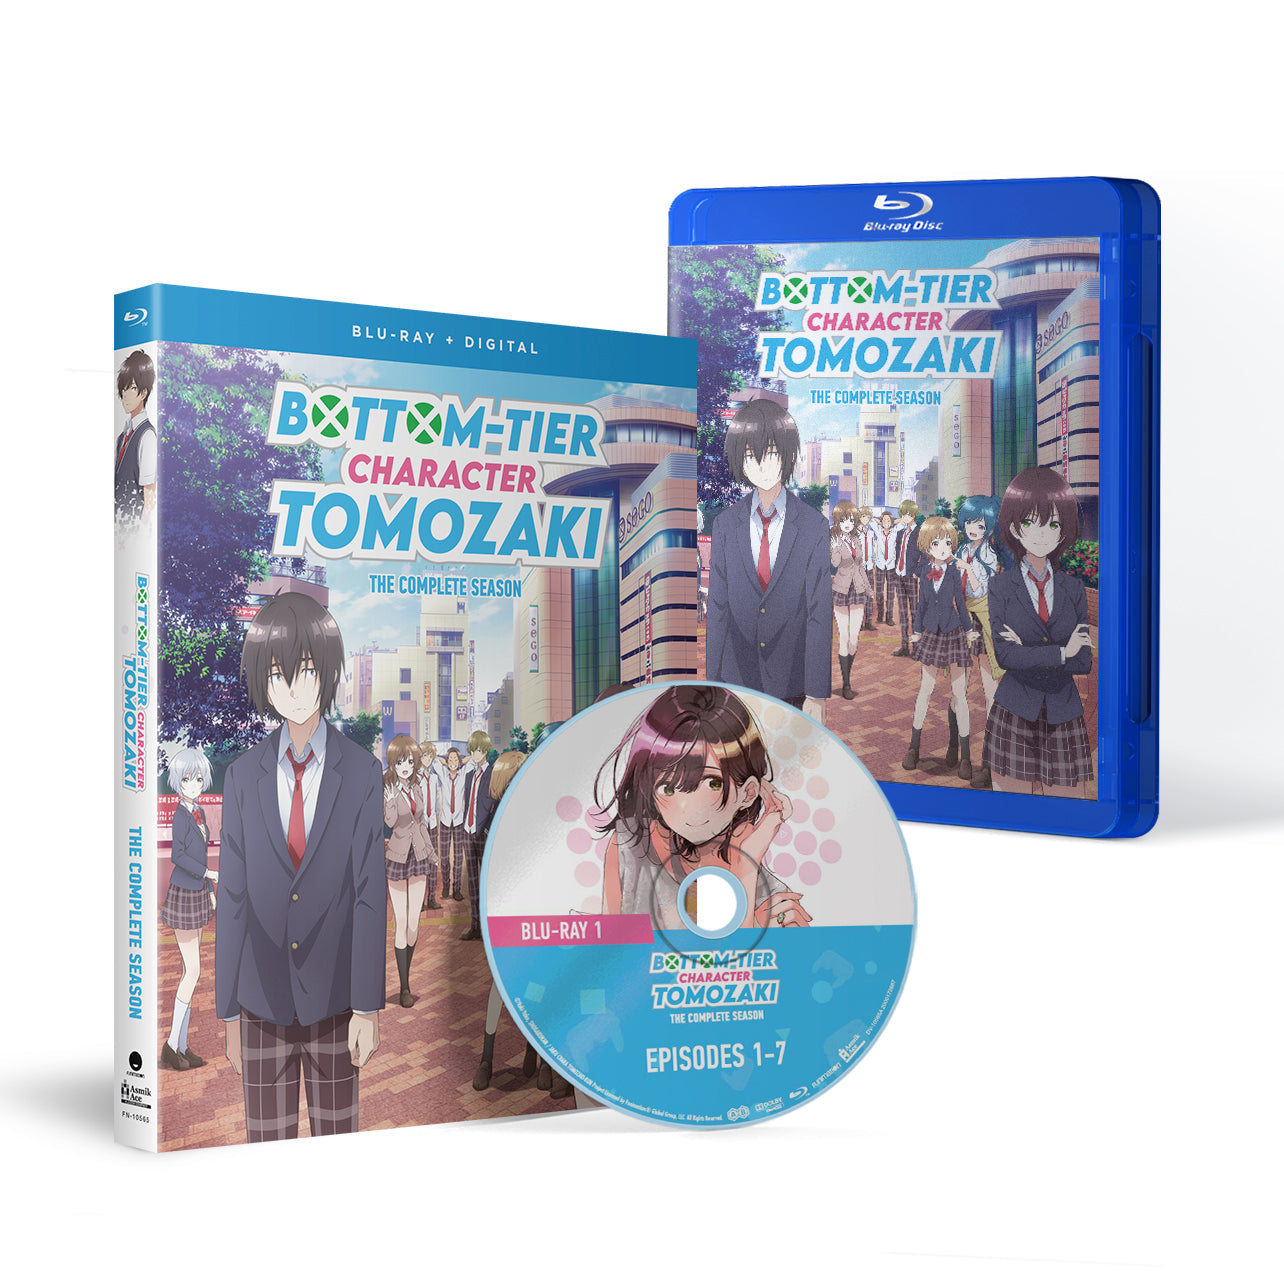 Bottom-Tier Character Tomozaki - The Complete Season - Blu-ray image count 0